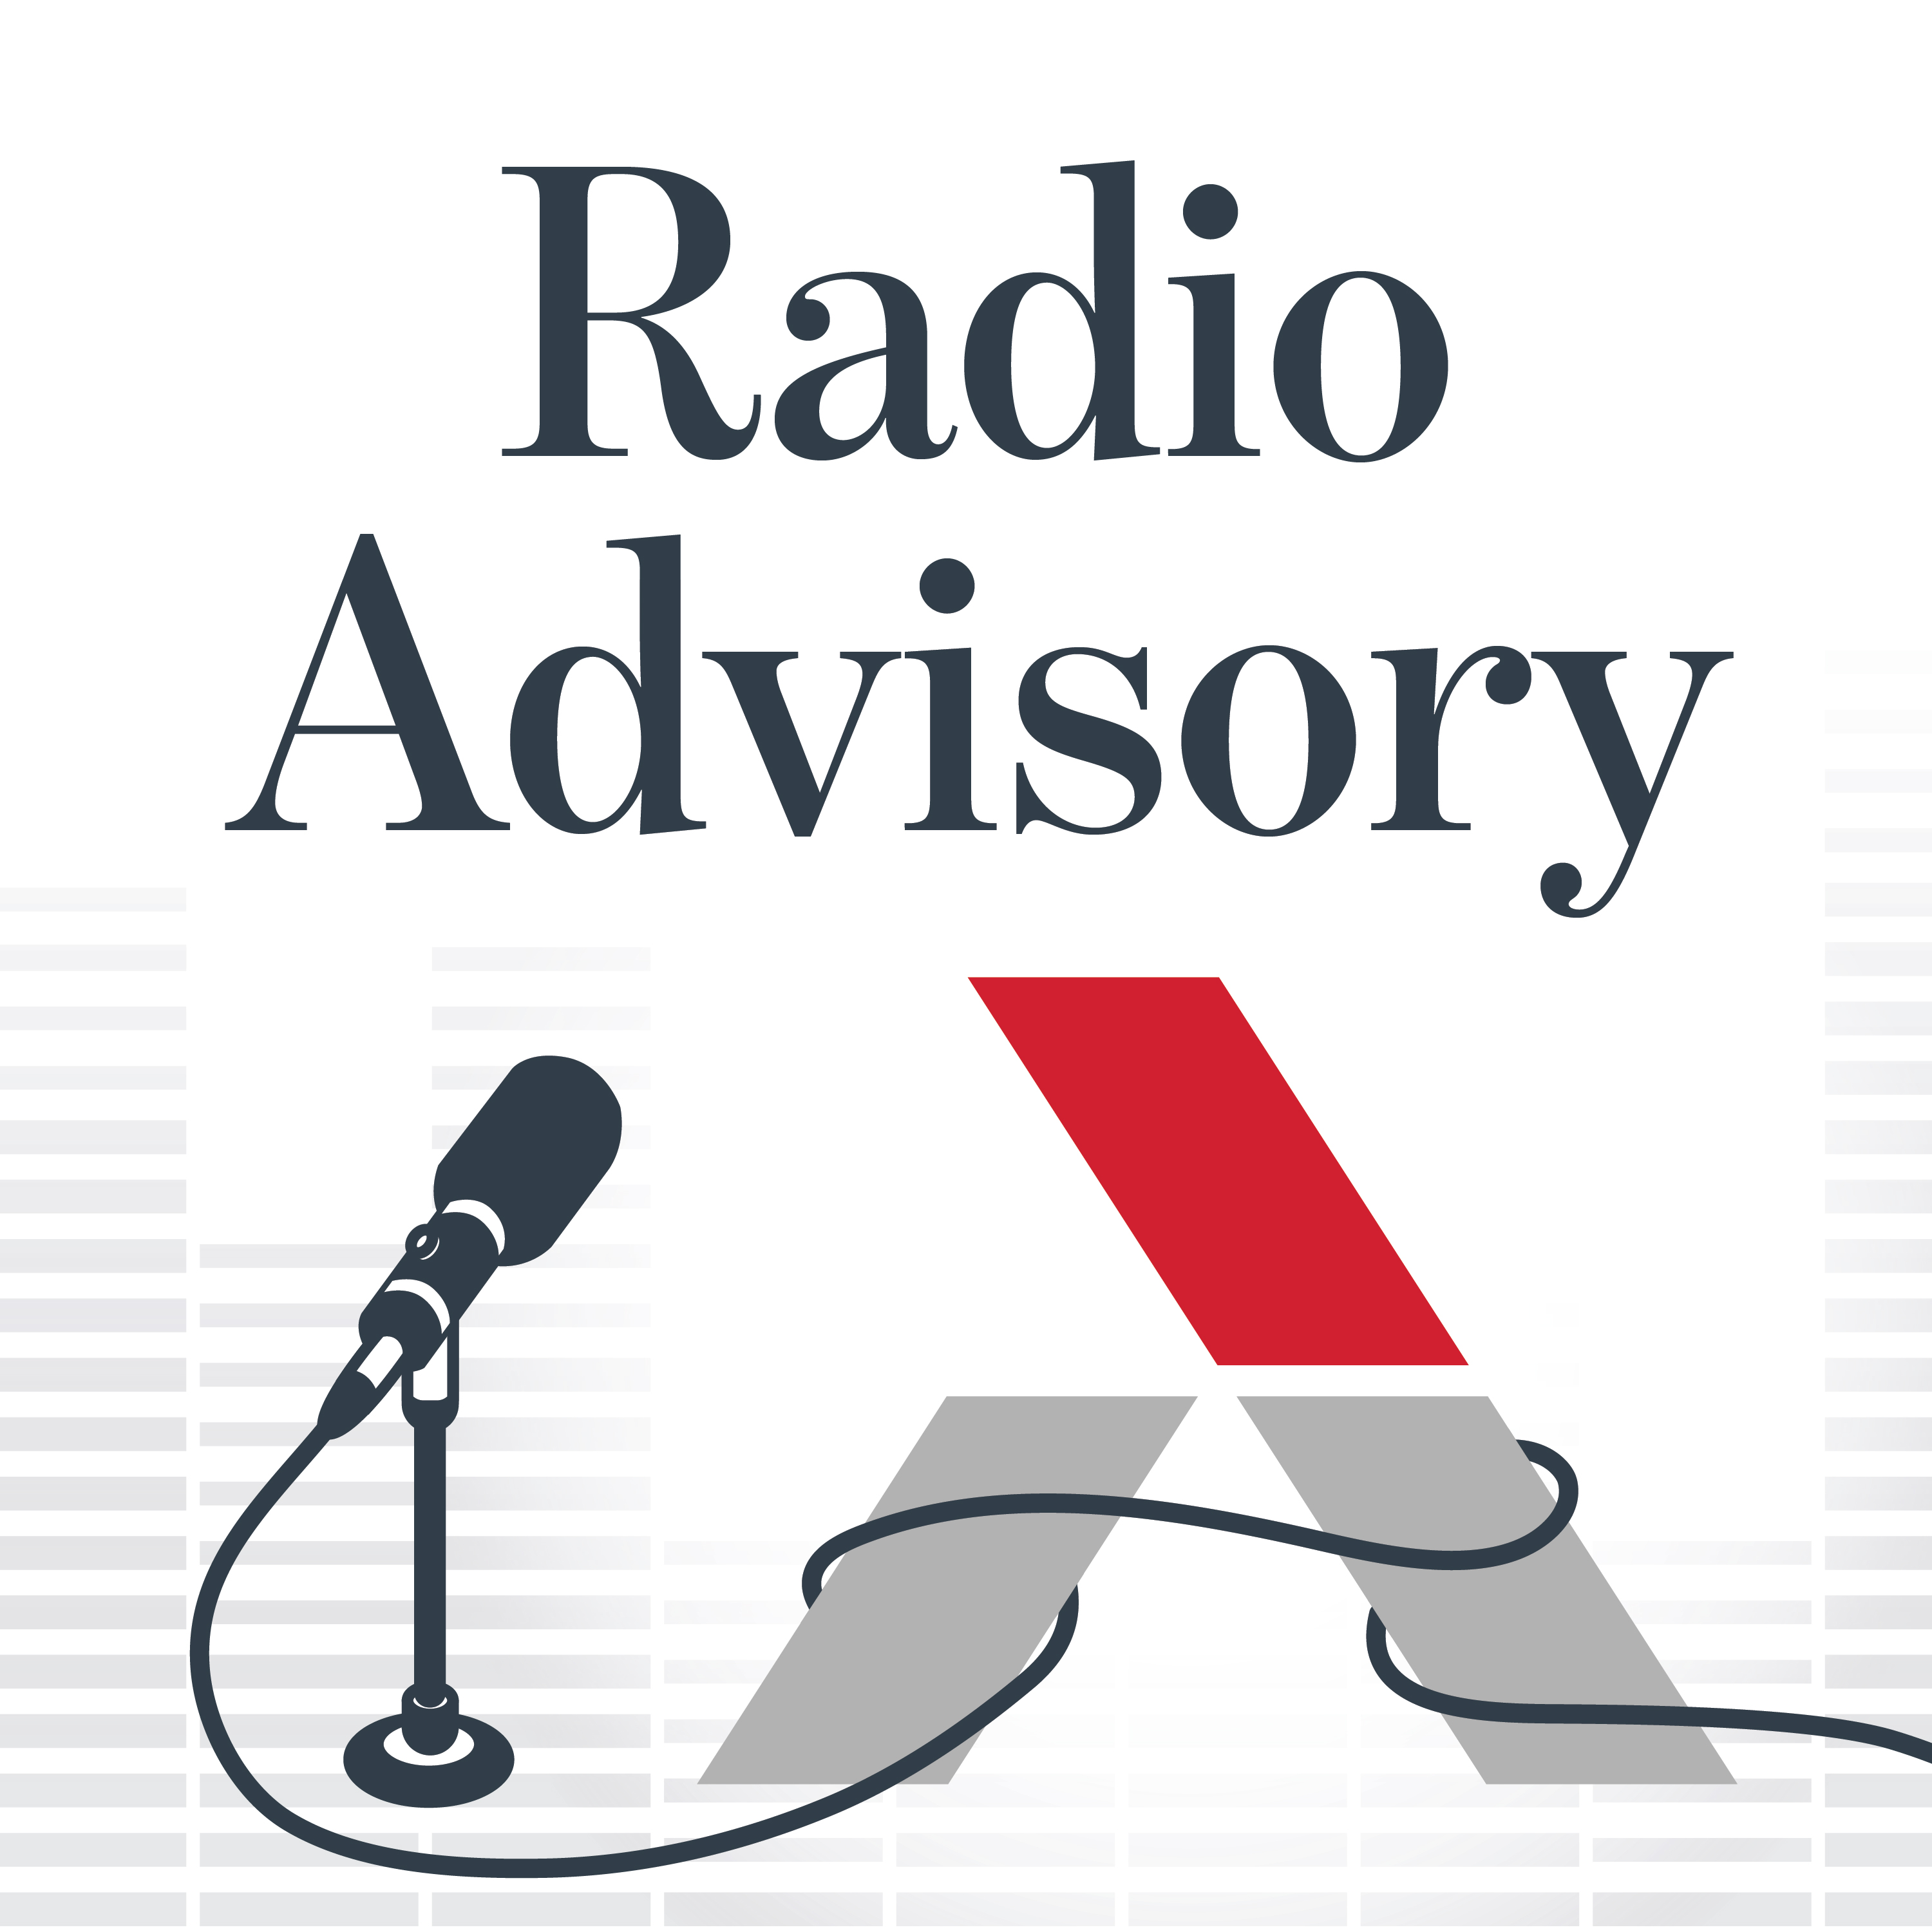 Radio Advisory